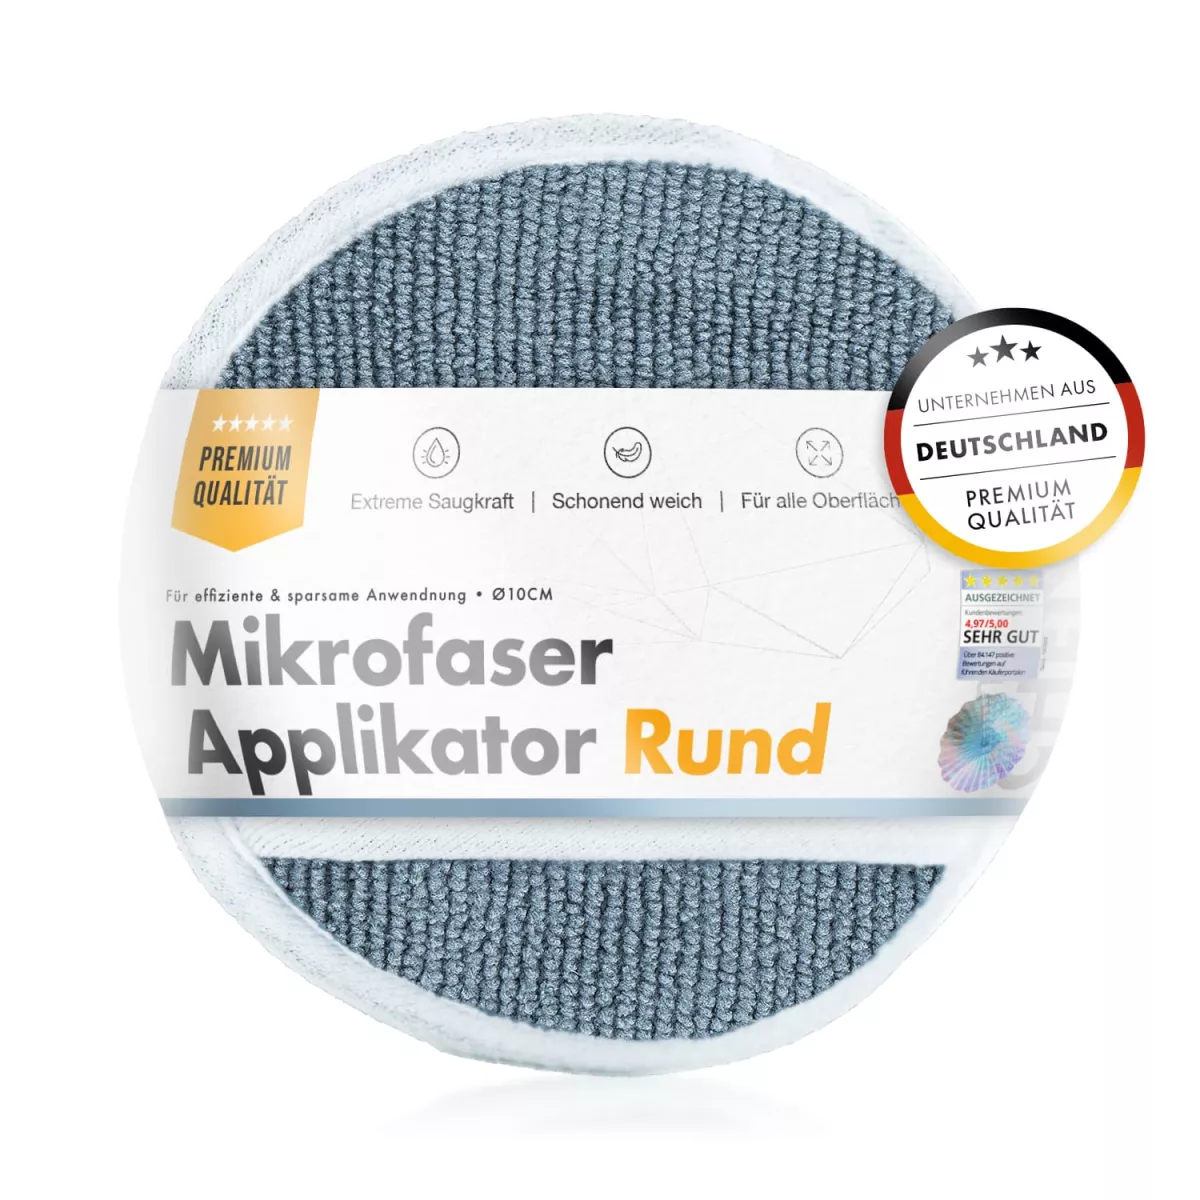 Round Microfiber Applicator